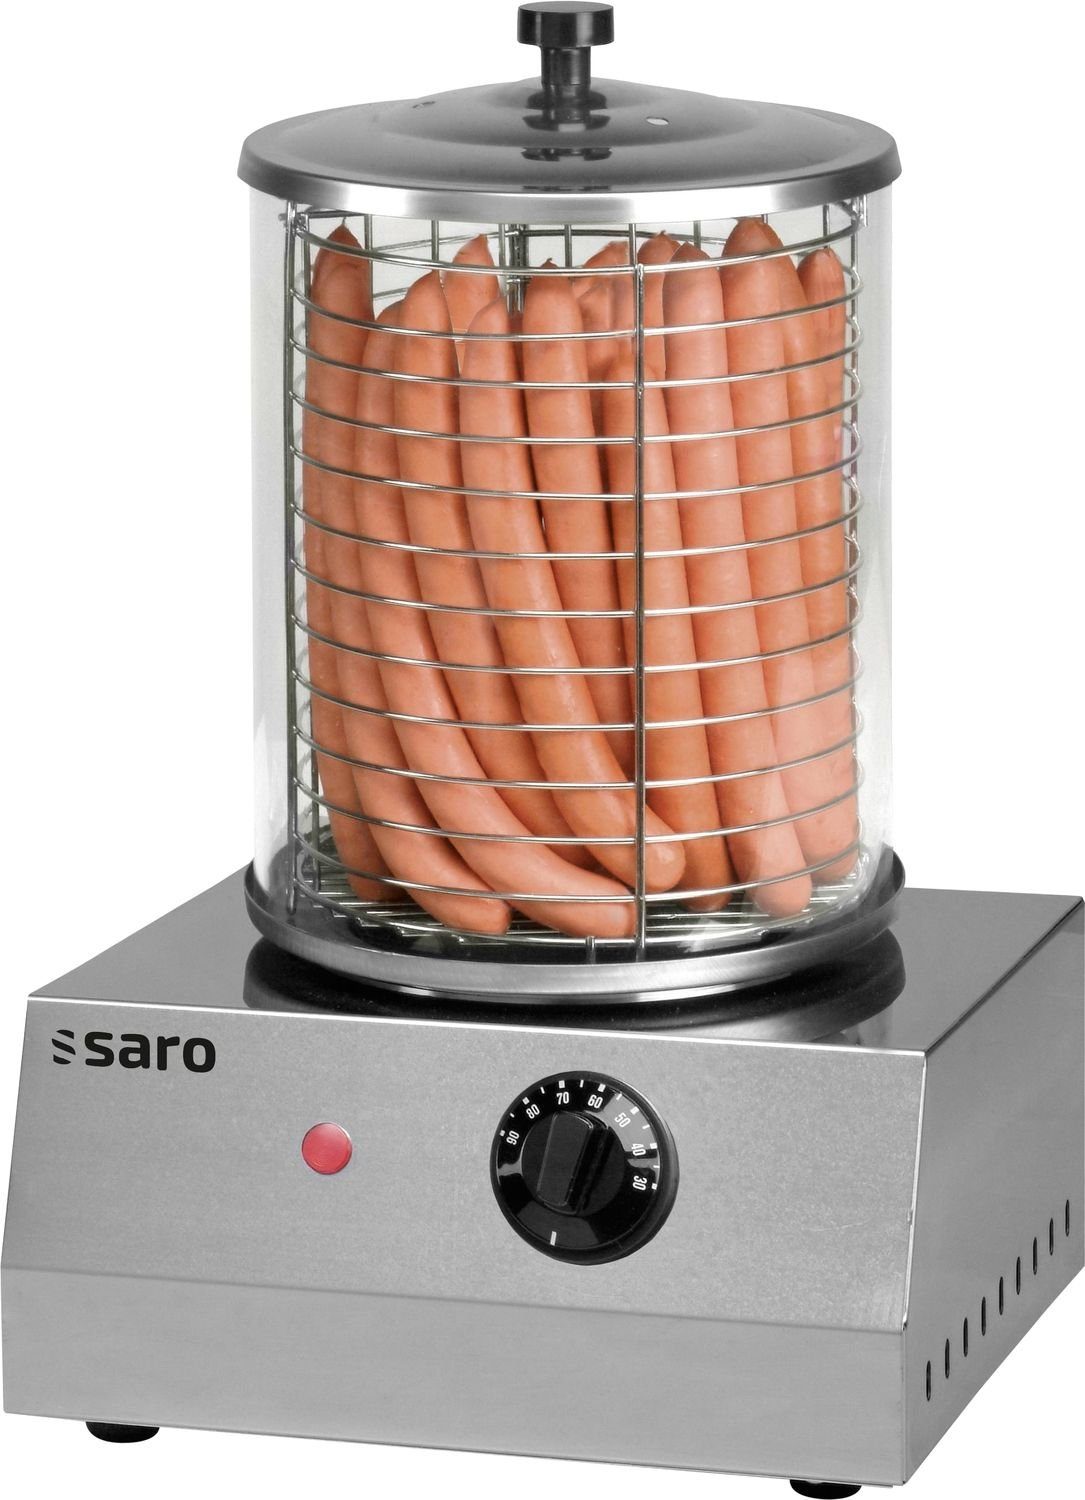 Saro Hotdog-Maker Hot Dog Maker, Würstchenwärmer, Hot Dog Steamer - Modell CS-100